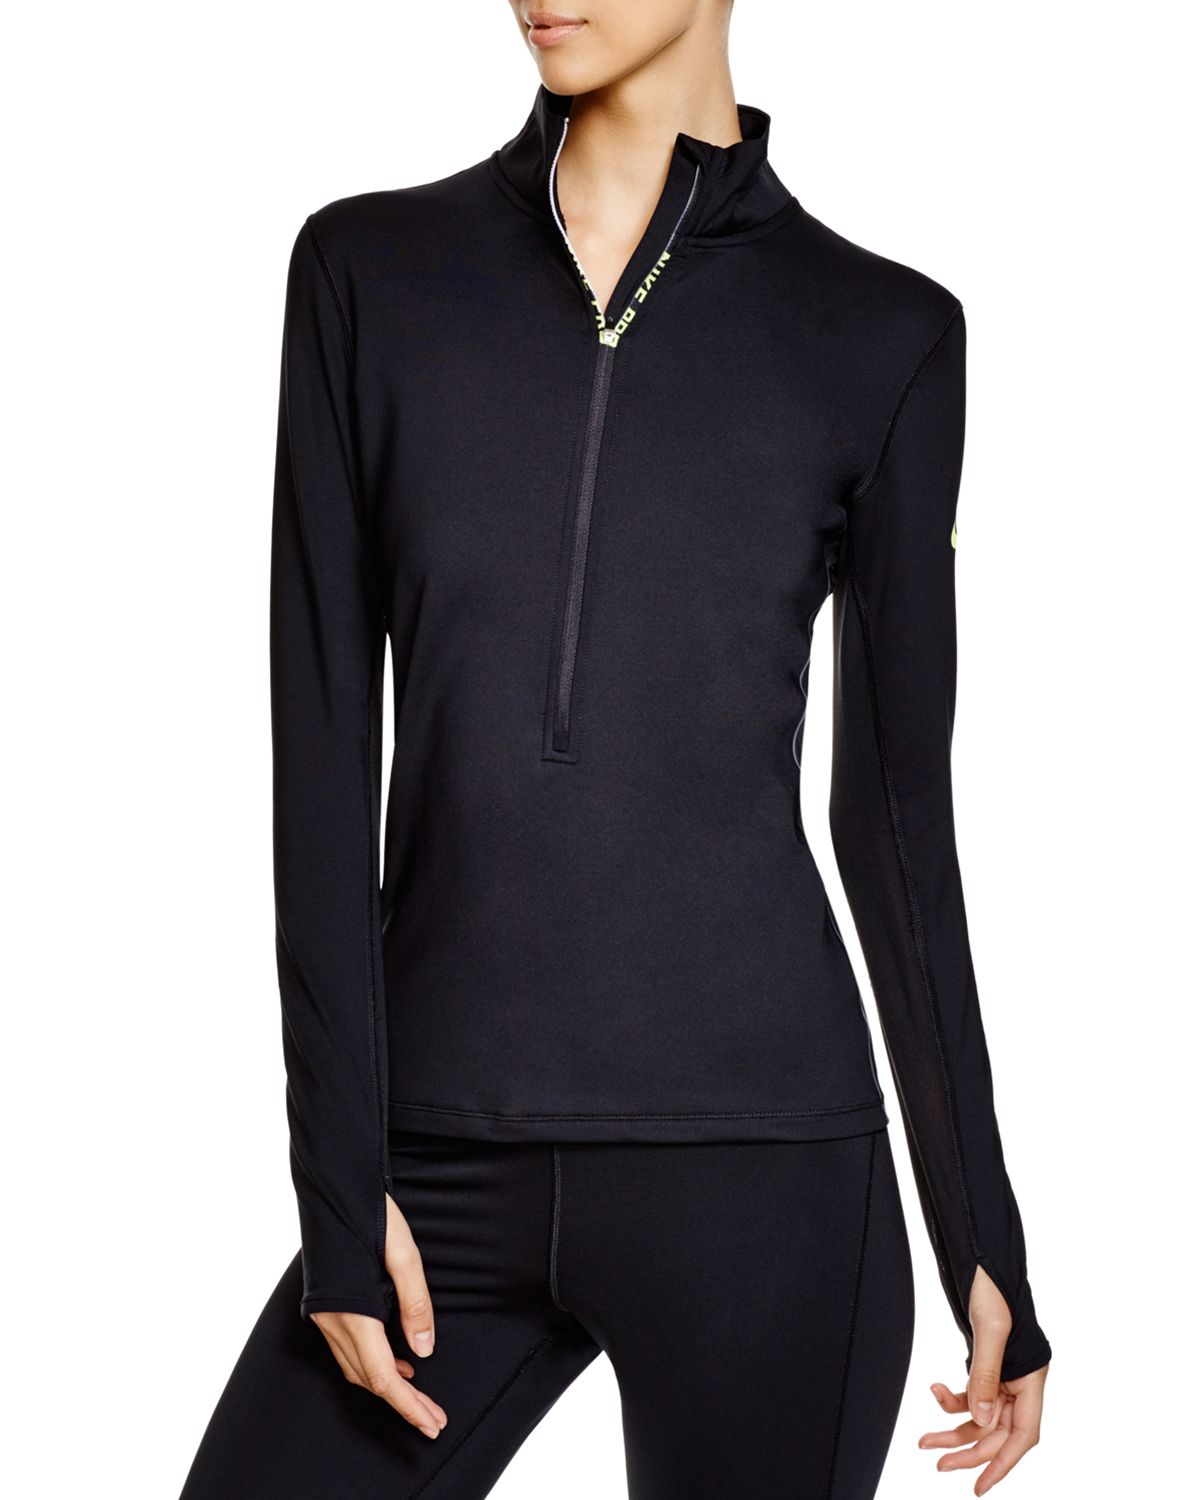 Nike Pro Hyperwarm Max Half-zip Jacket in Black | Lyst